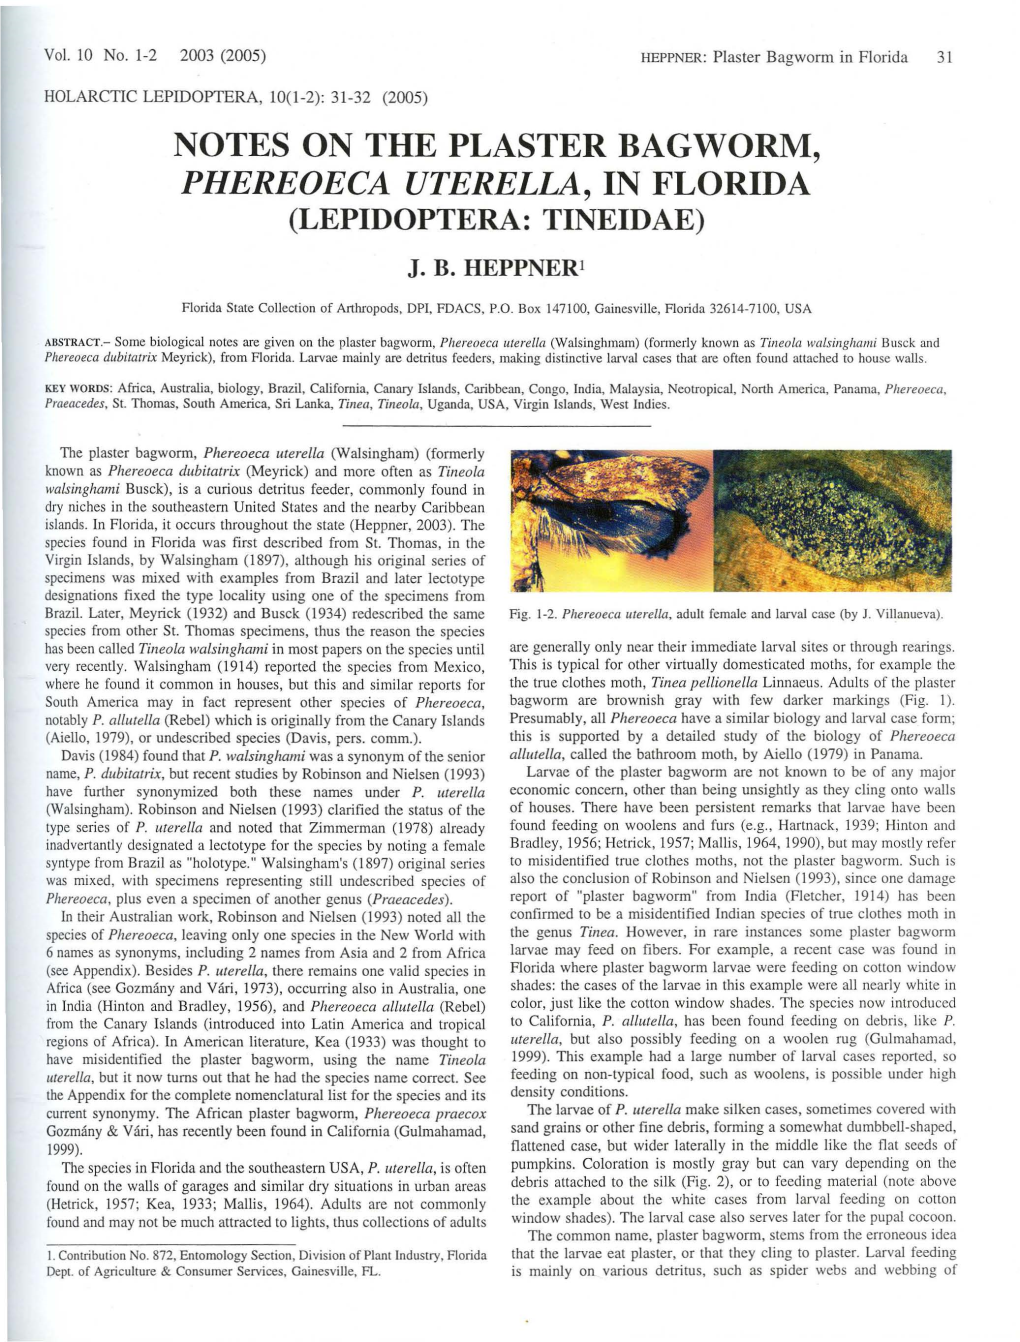 Notes on the Plaster Bagworm, Phereoeca Uterella, in Florida (Lepidoptera: Tineidae)